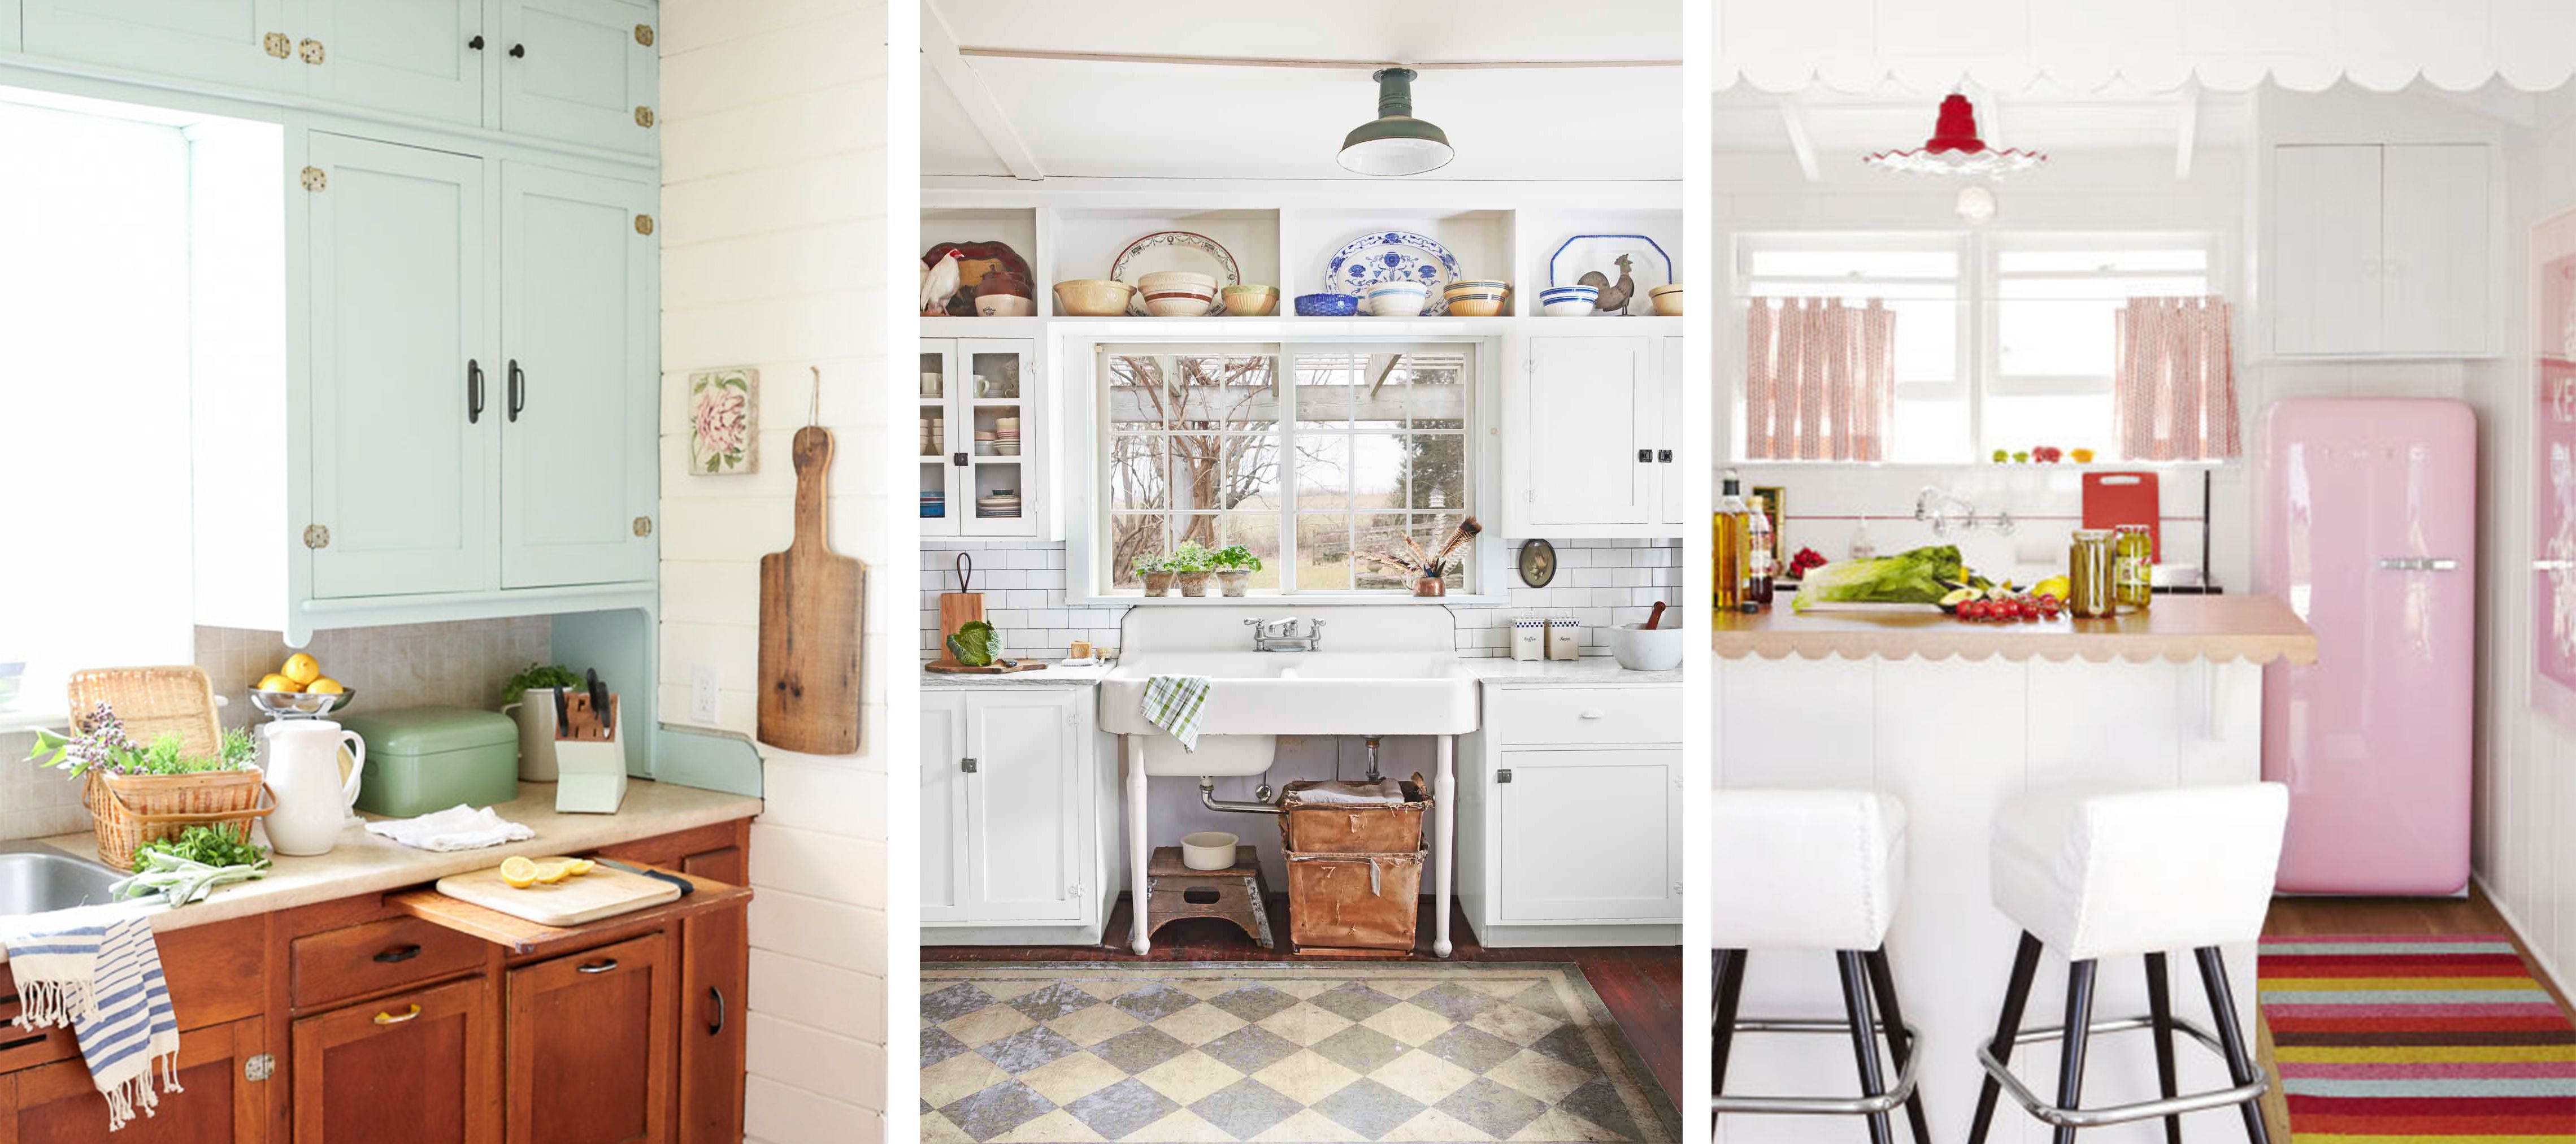 25 Vintage Kitchen Decorating Ideas   Design Inspiration for Retro ...